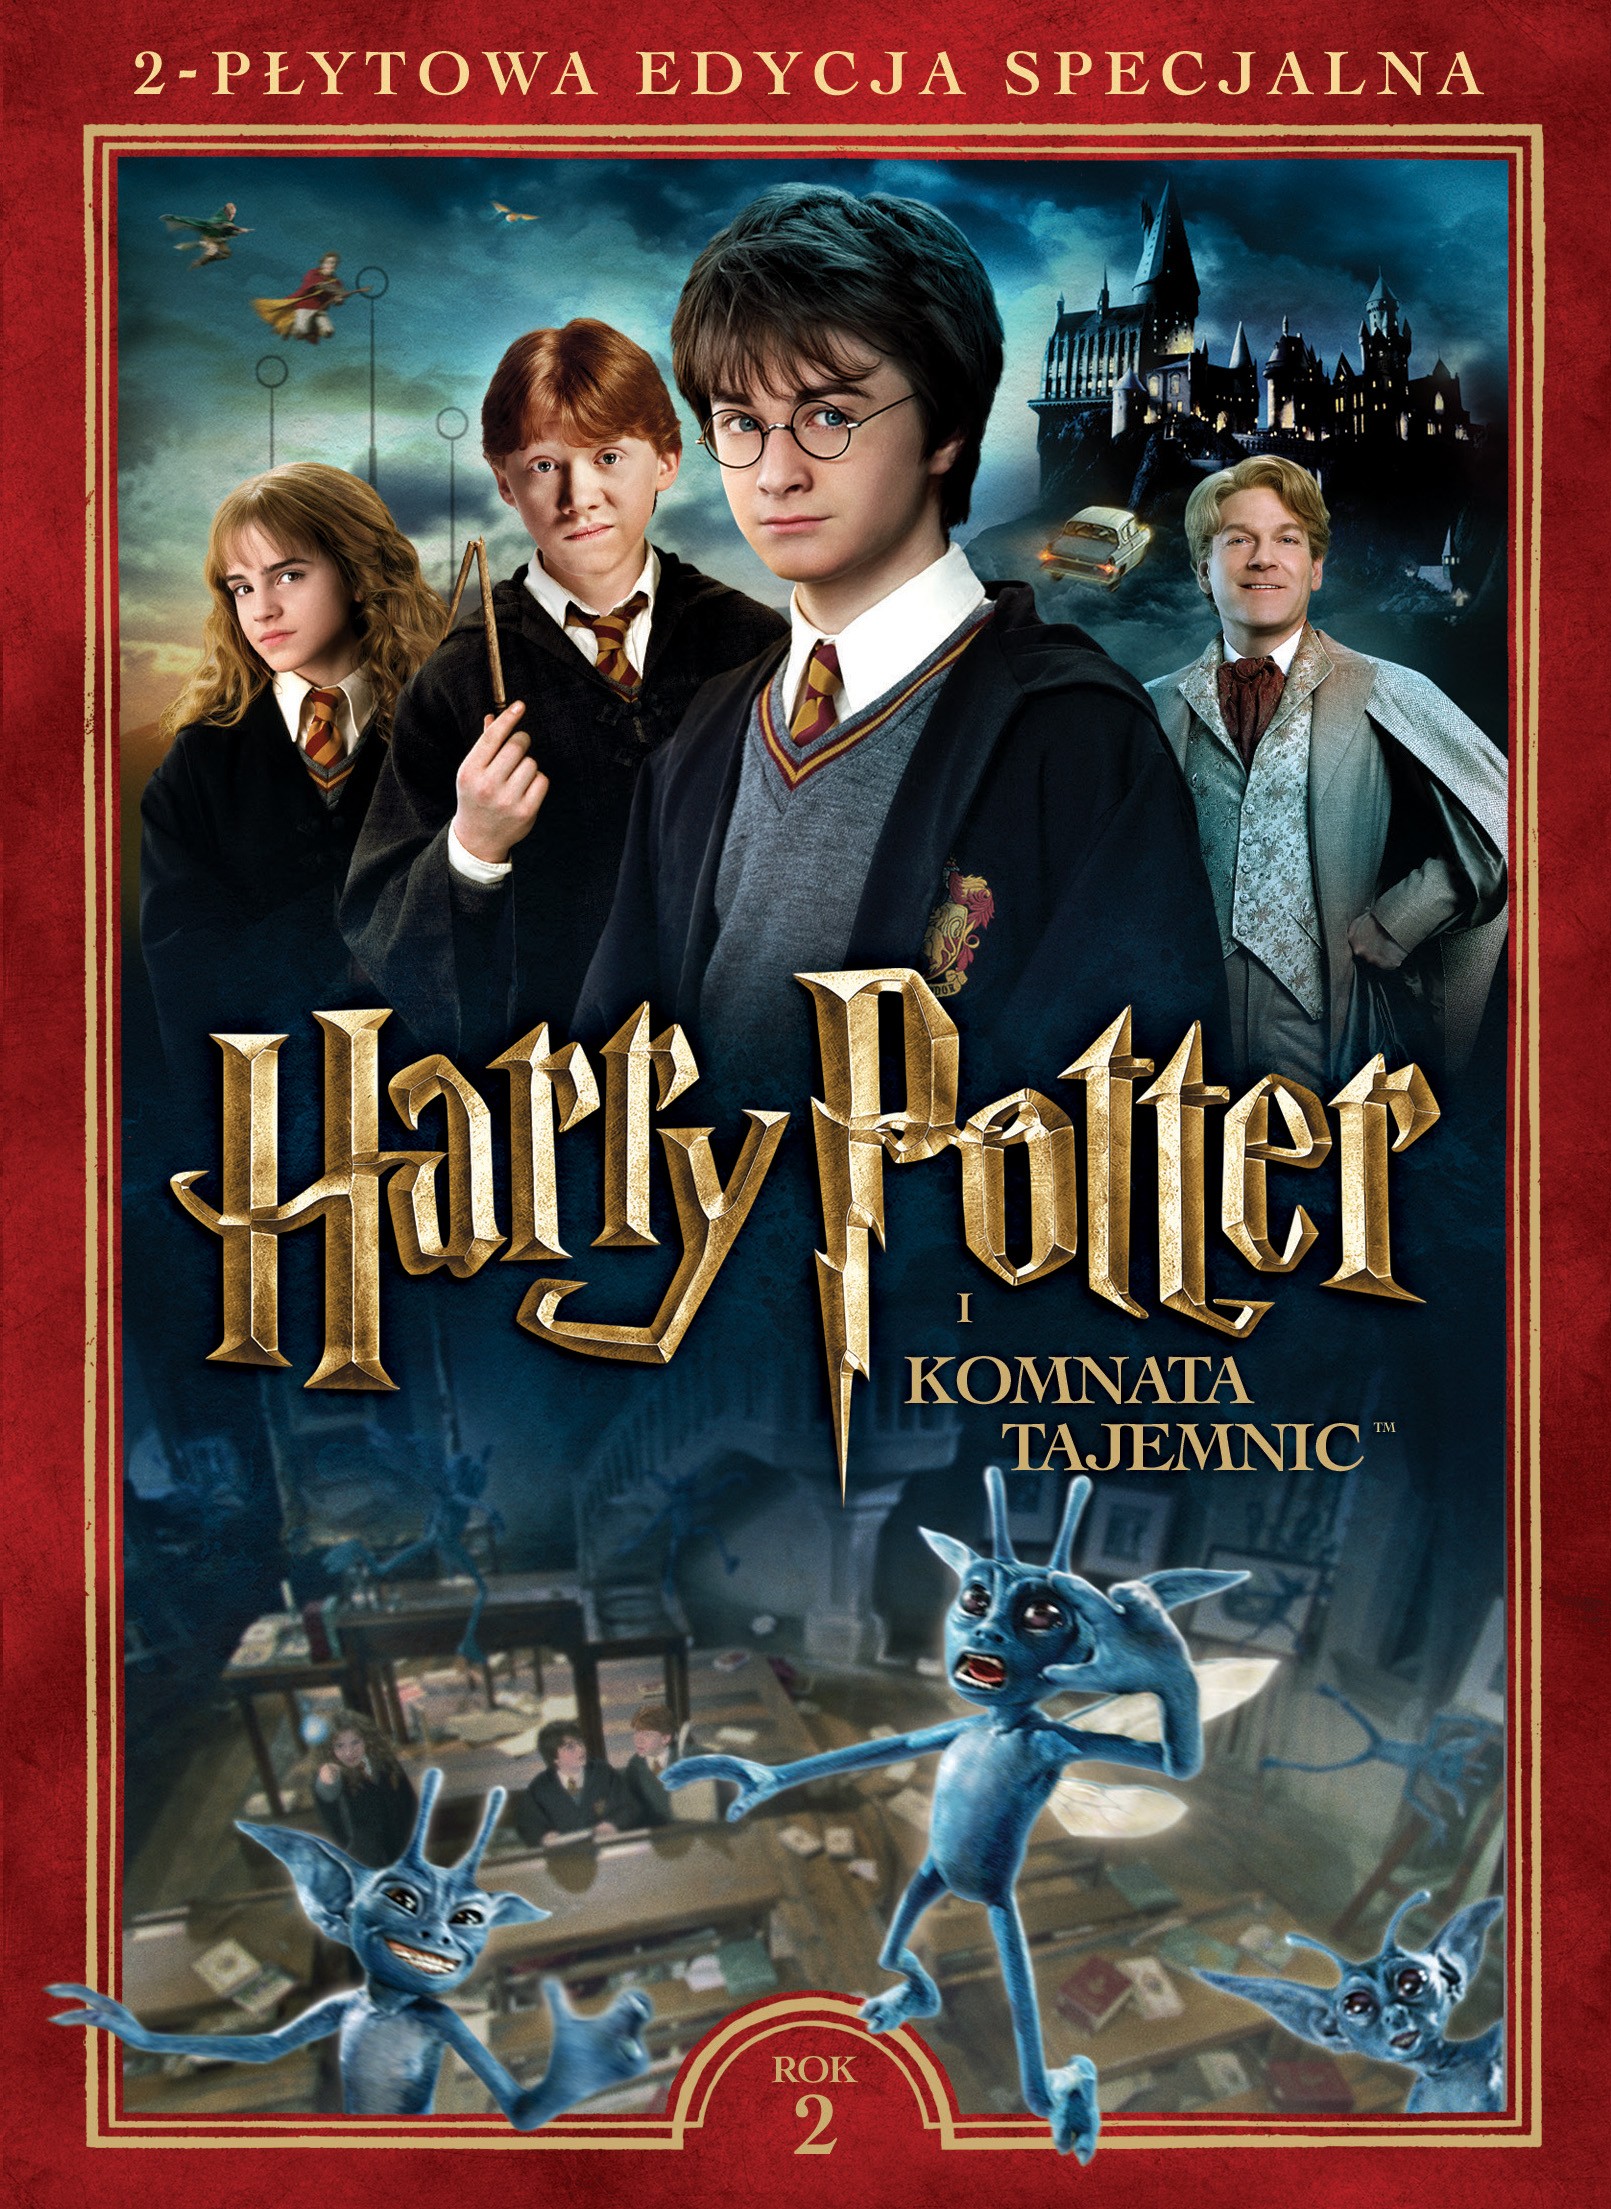 _pressroom_materialy_0_Harry_Potter2_DVD_2D.jpg